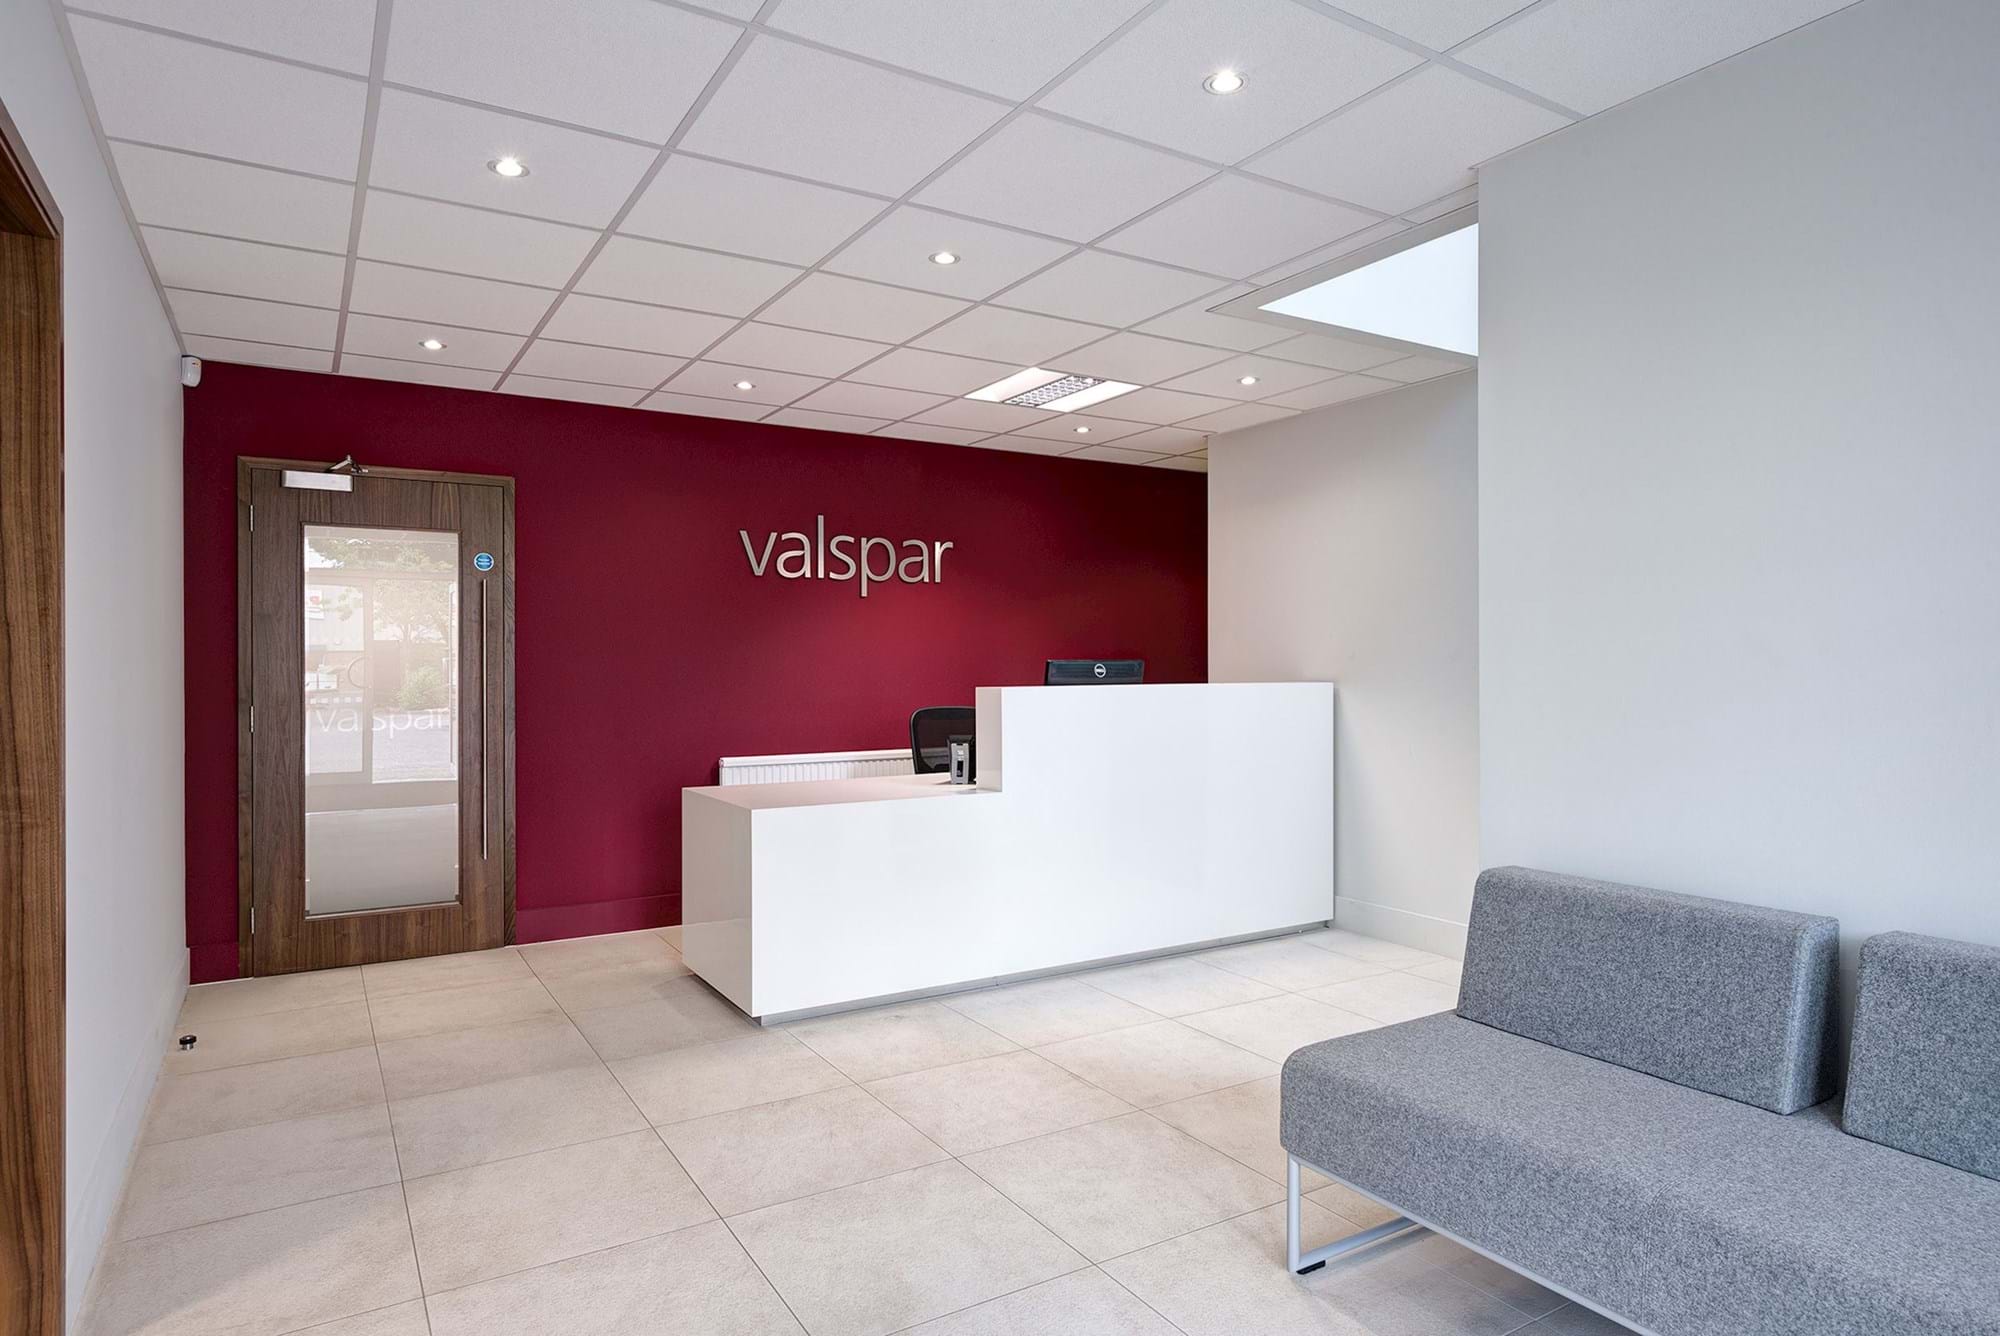 Modus Workspace office design, fit out and refurbishment - Valspar - Reception - Valspar 02 highres sRGB.jpg